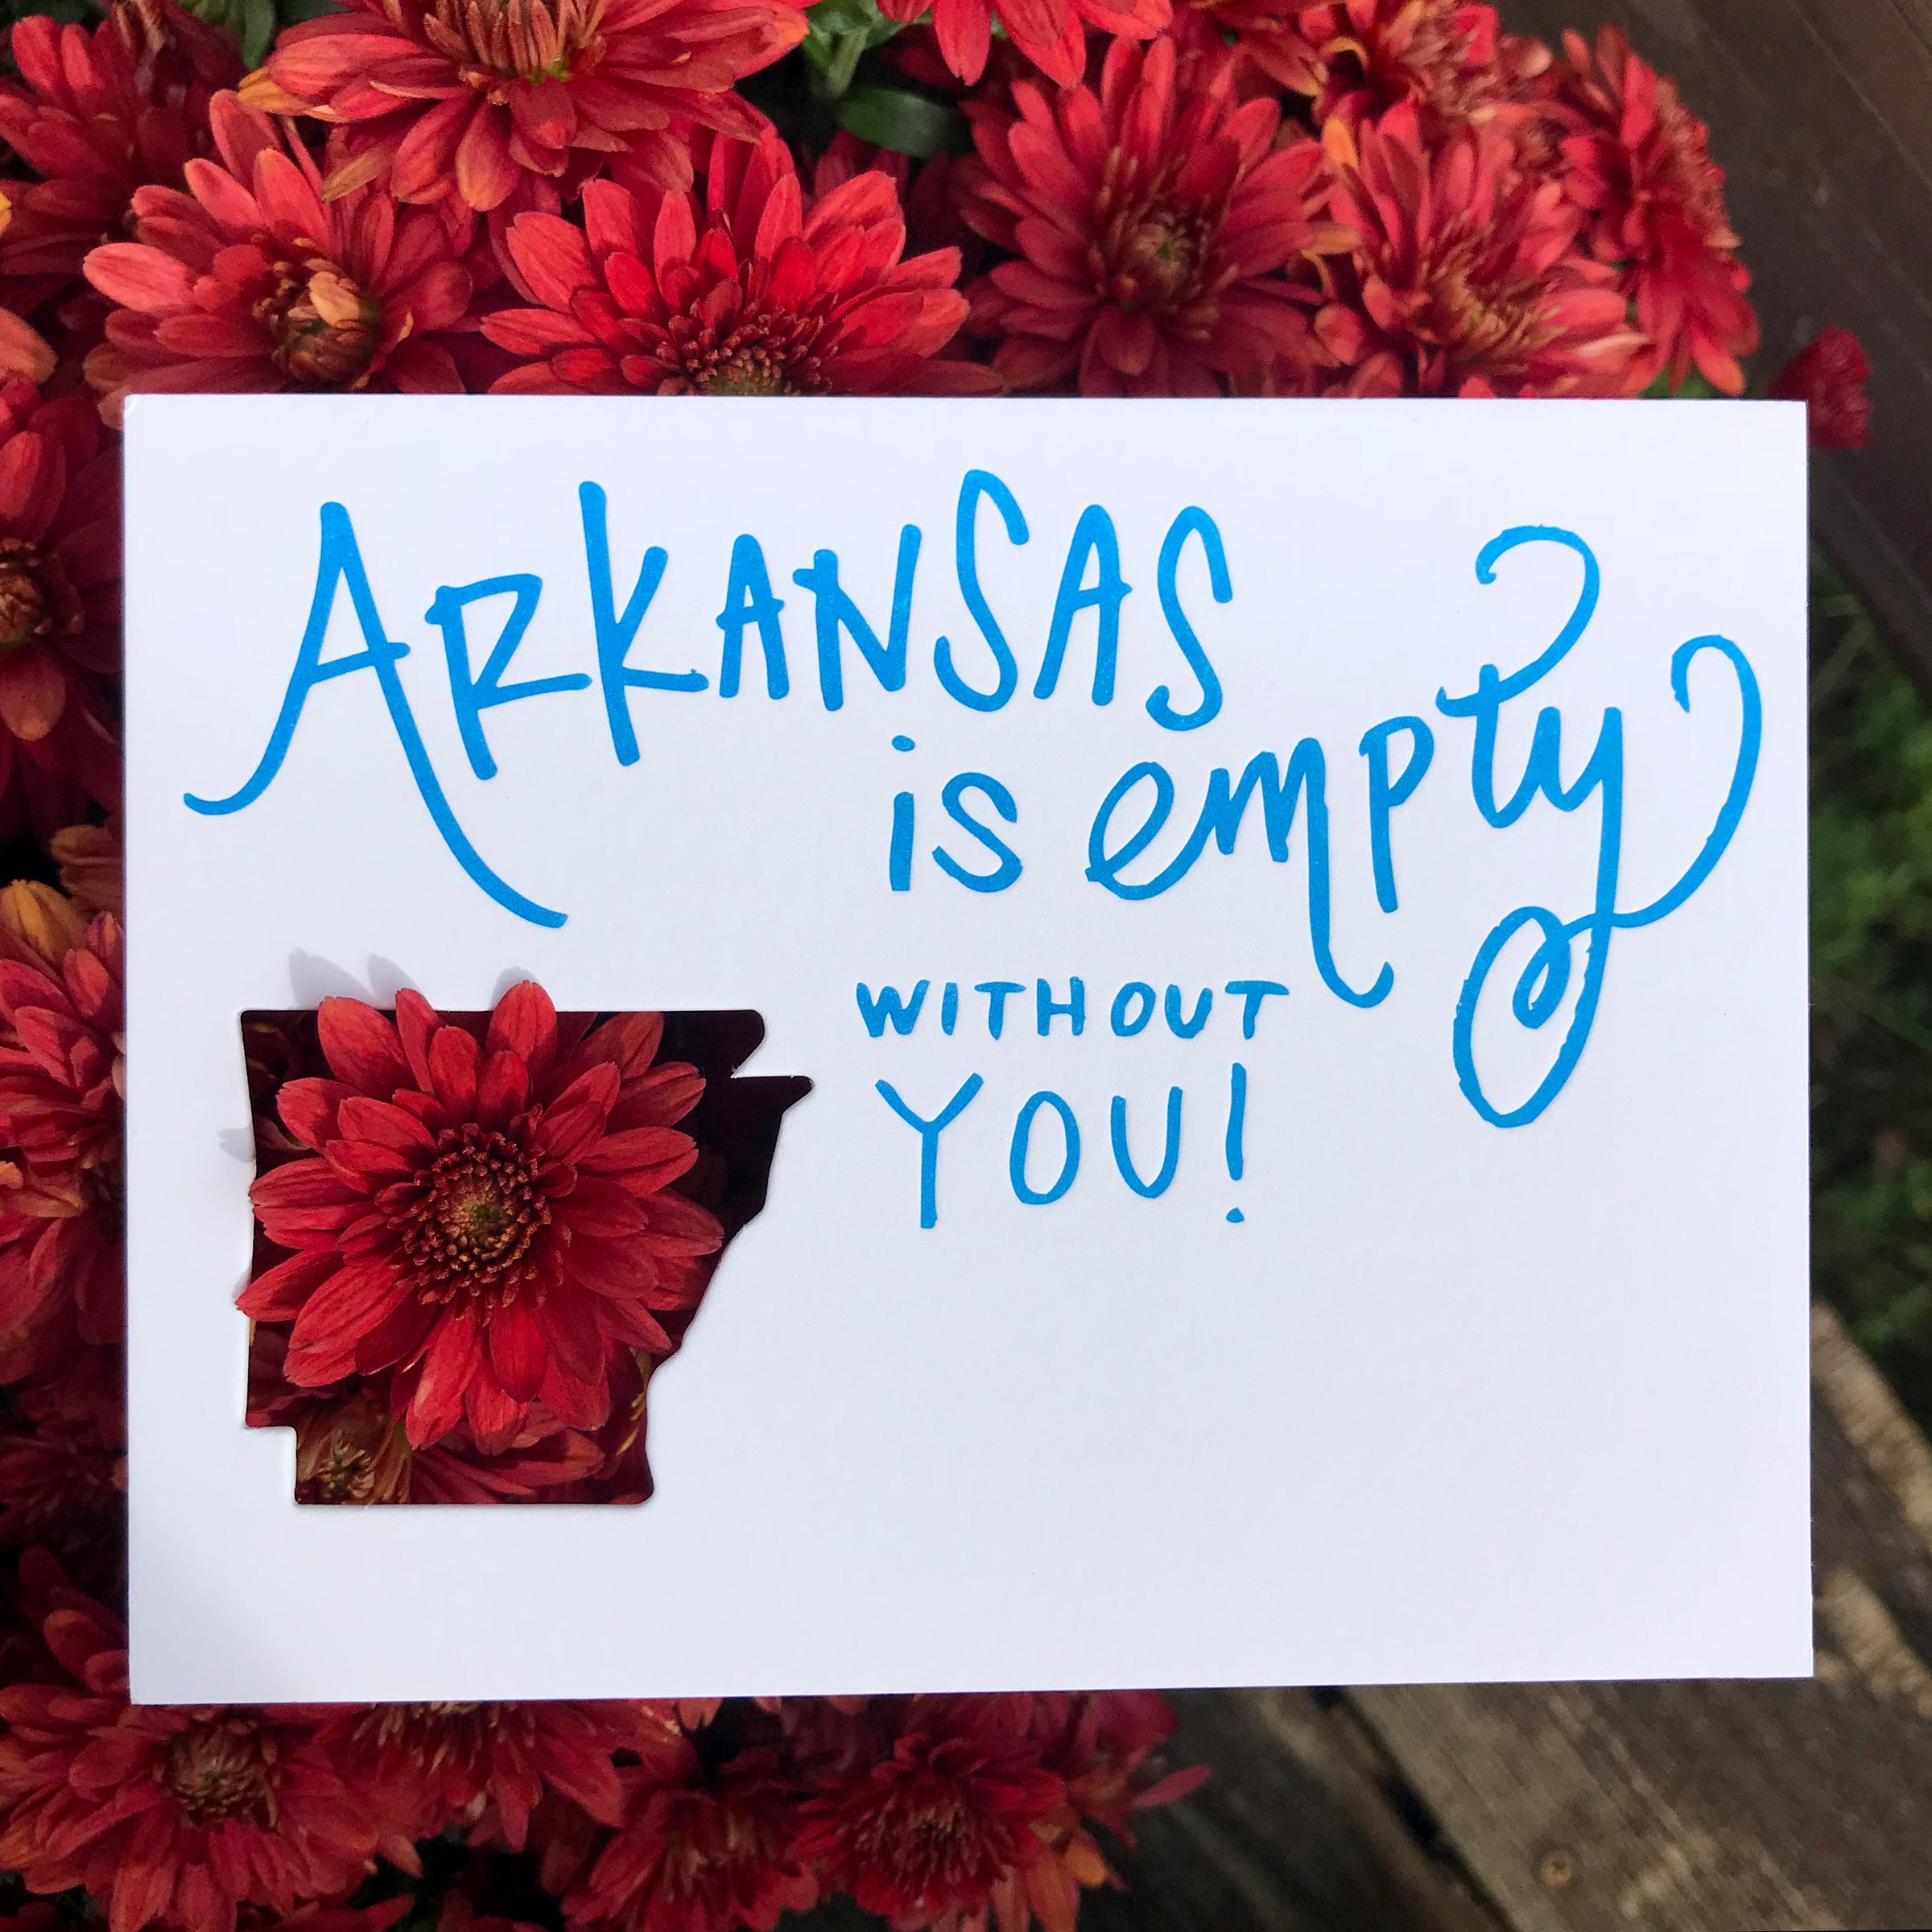 Arkansas is Empty | Die-Cut Letterpress Greeting Card